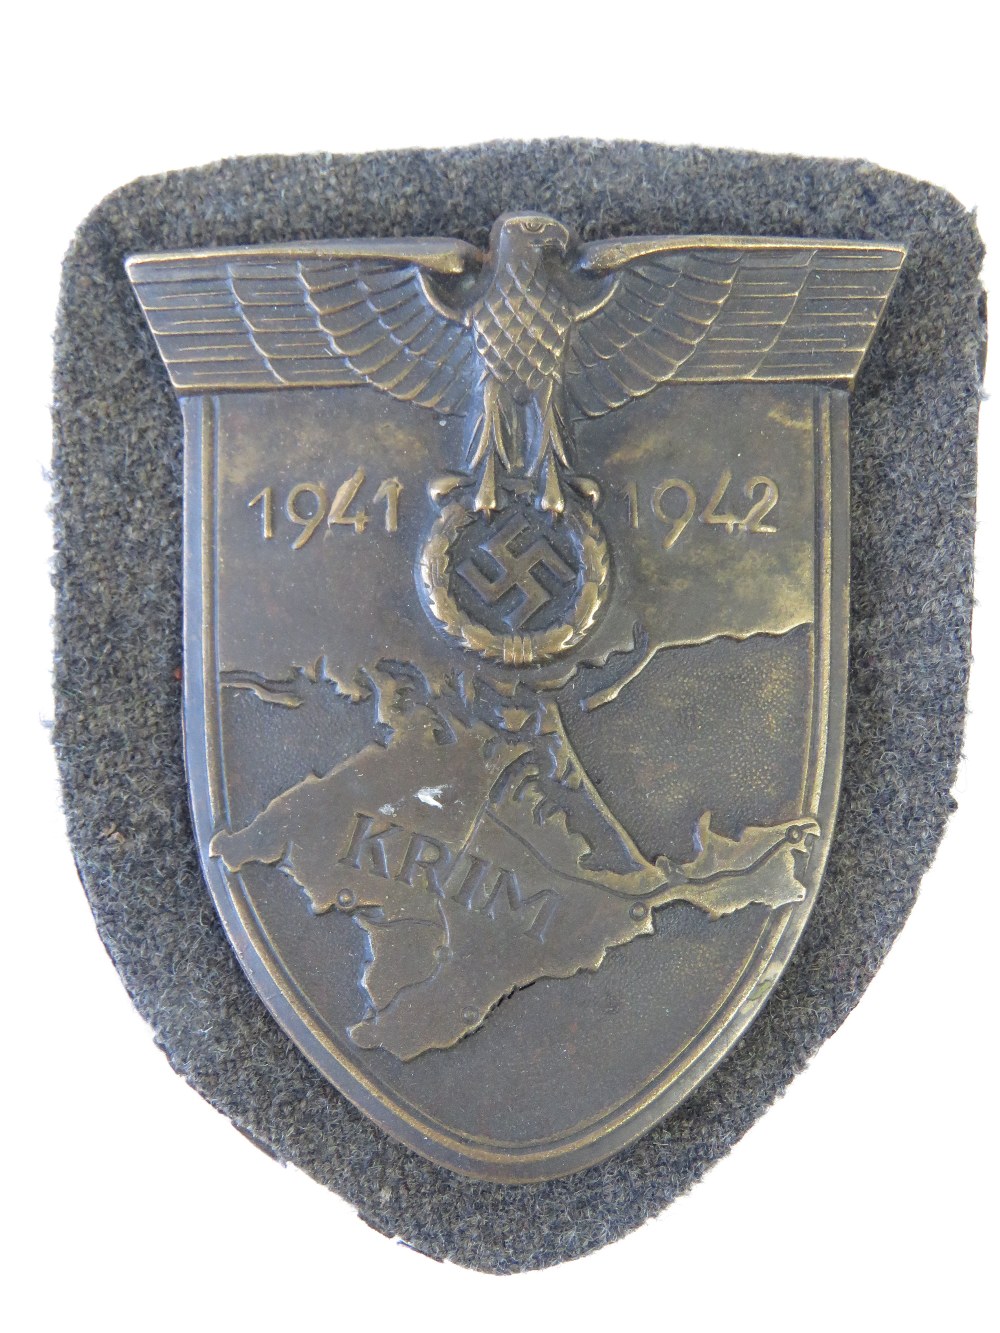 A WWII German "1941-1942" Krim shield.